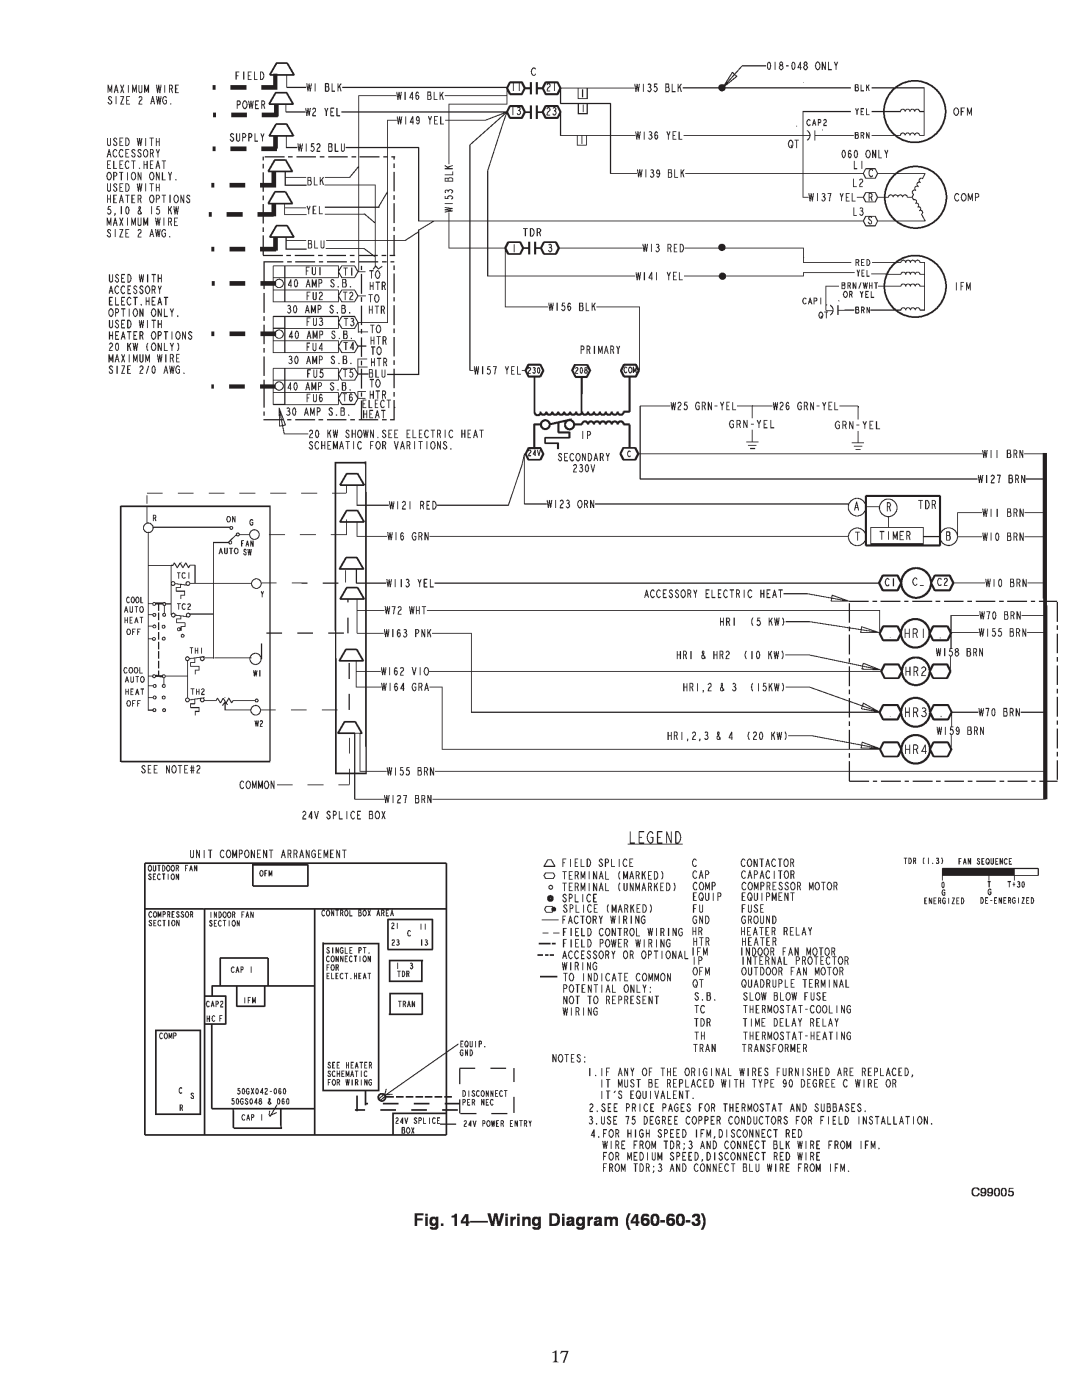 Carrier 50GX, 50GS instruction manual WiringDiagram, C99005 